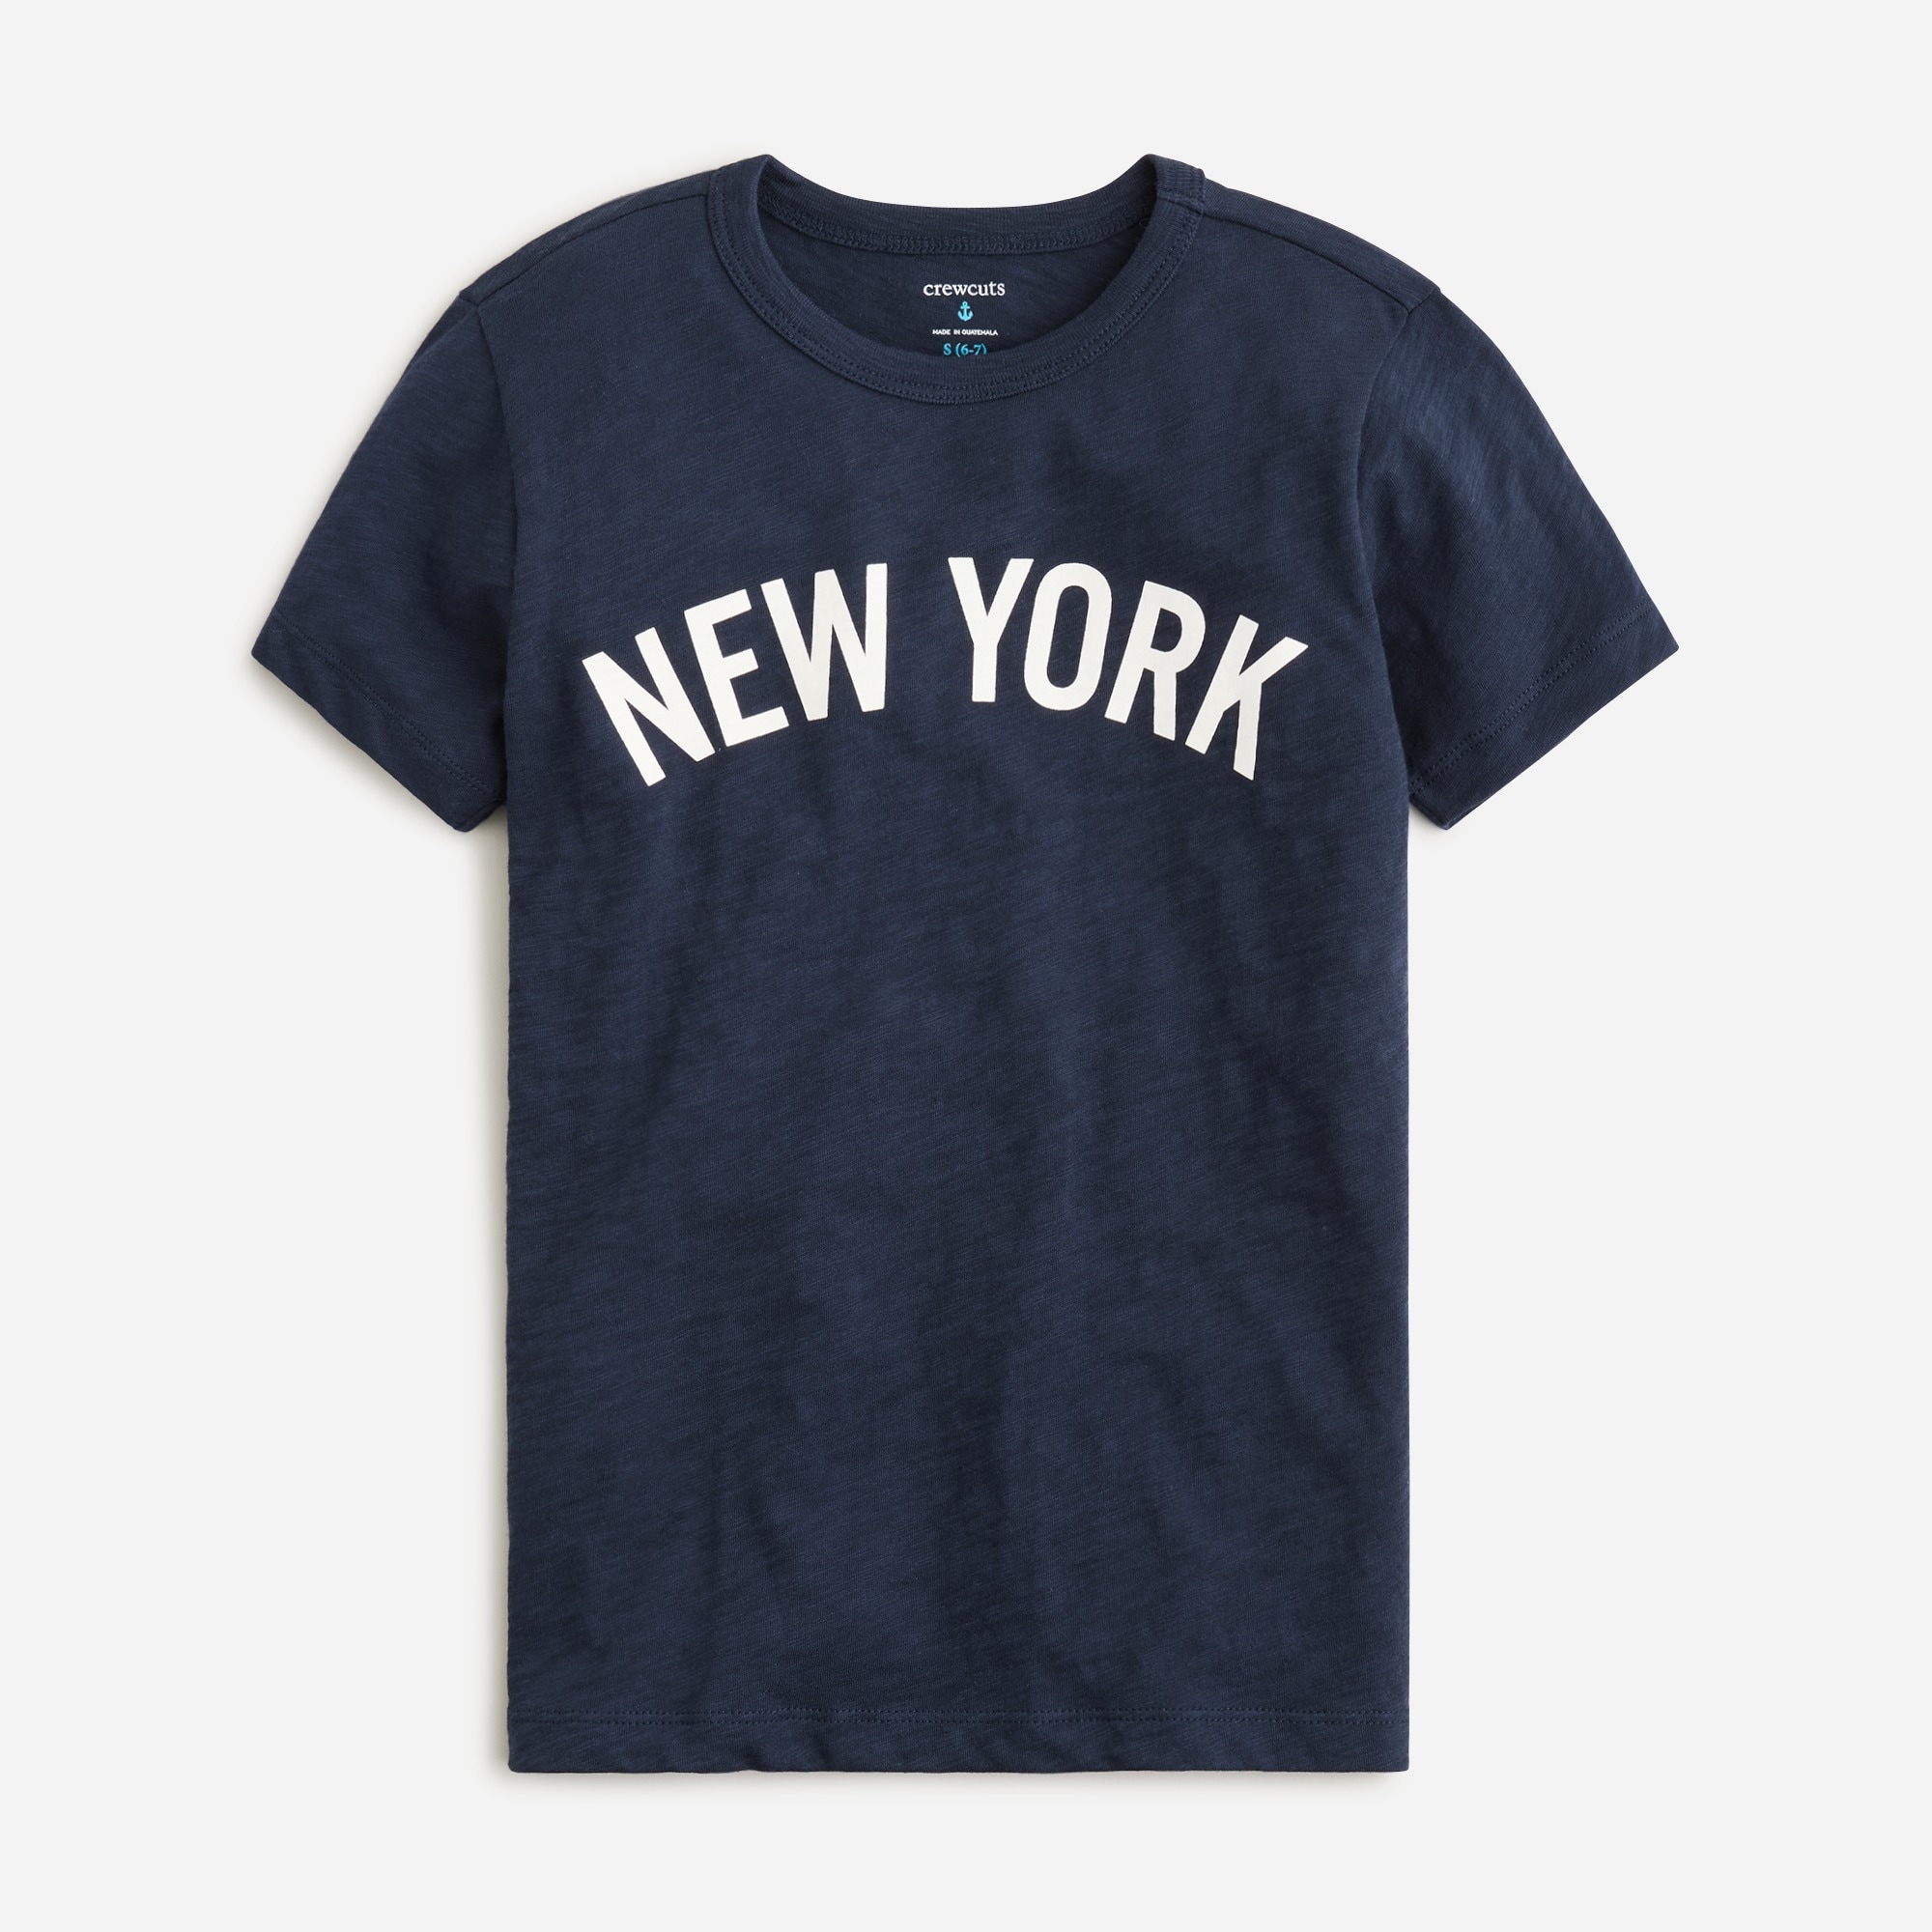  Boys' short-sleeve New York graphic T-shirt